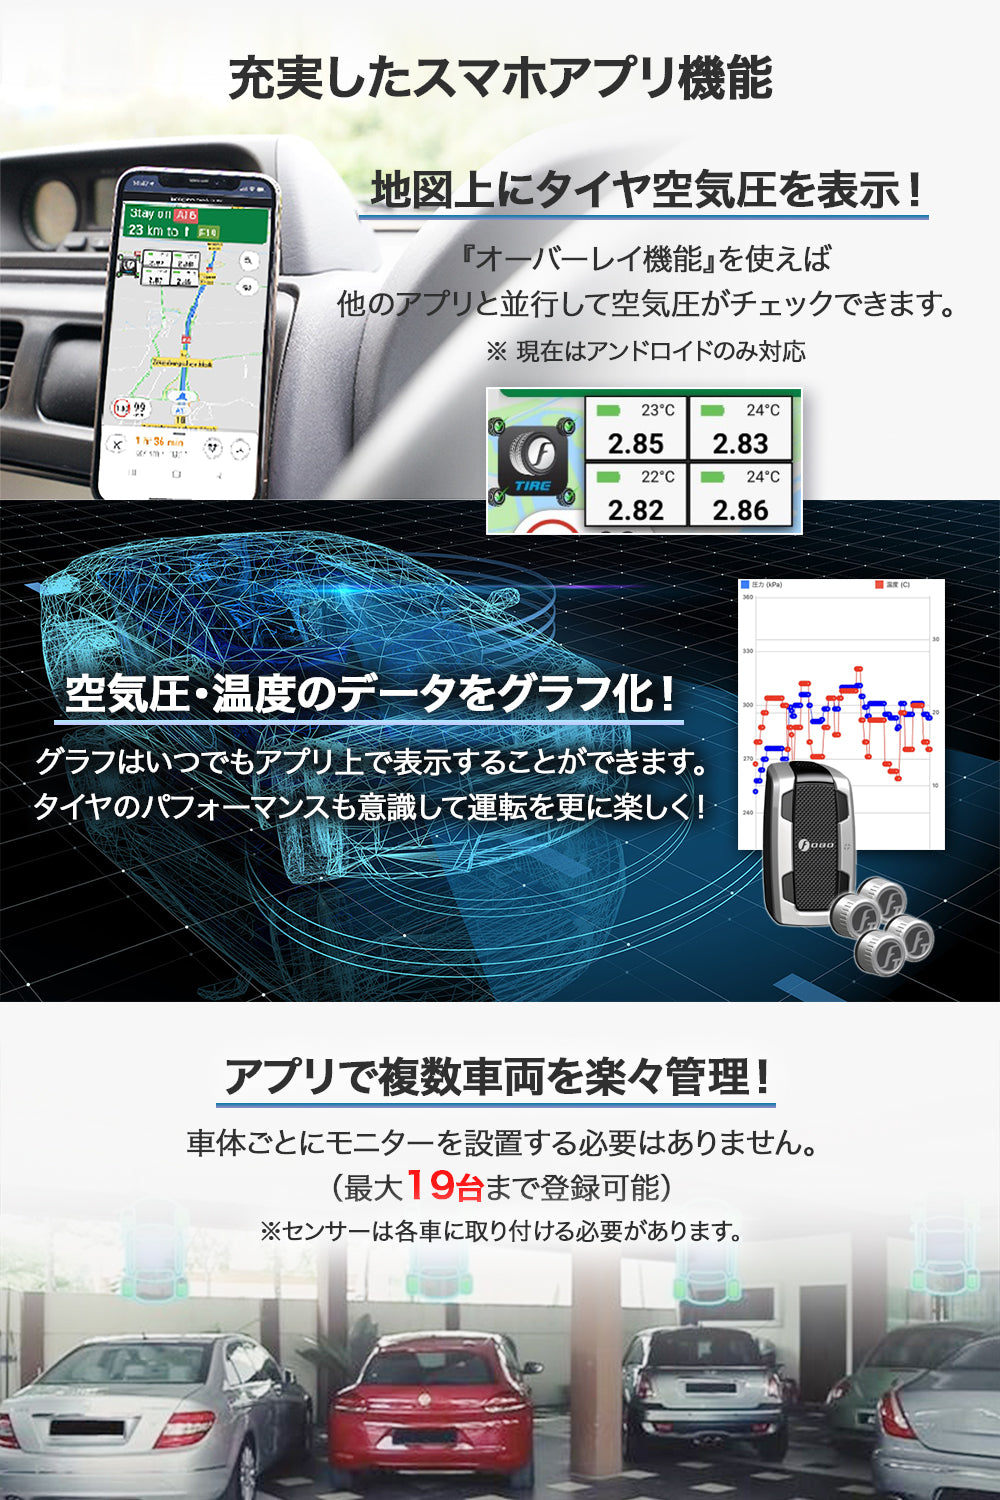 FOBOTIRE2 車 空気圧センサー TPMS【送料無料】 – K-HAVENS SHOP